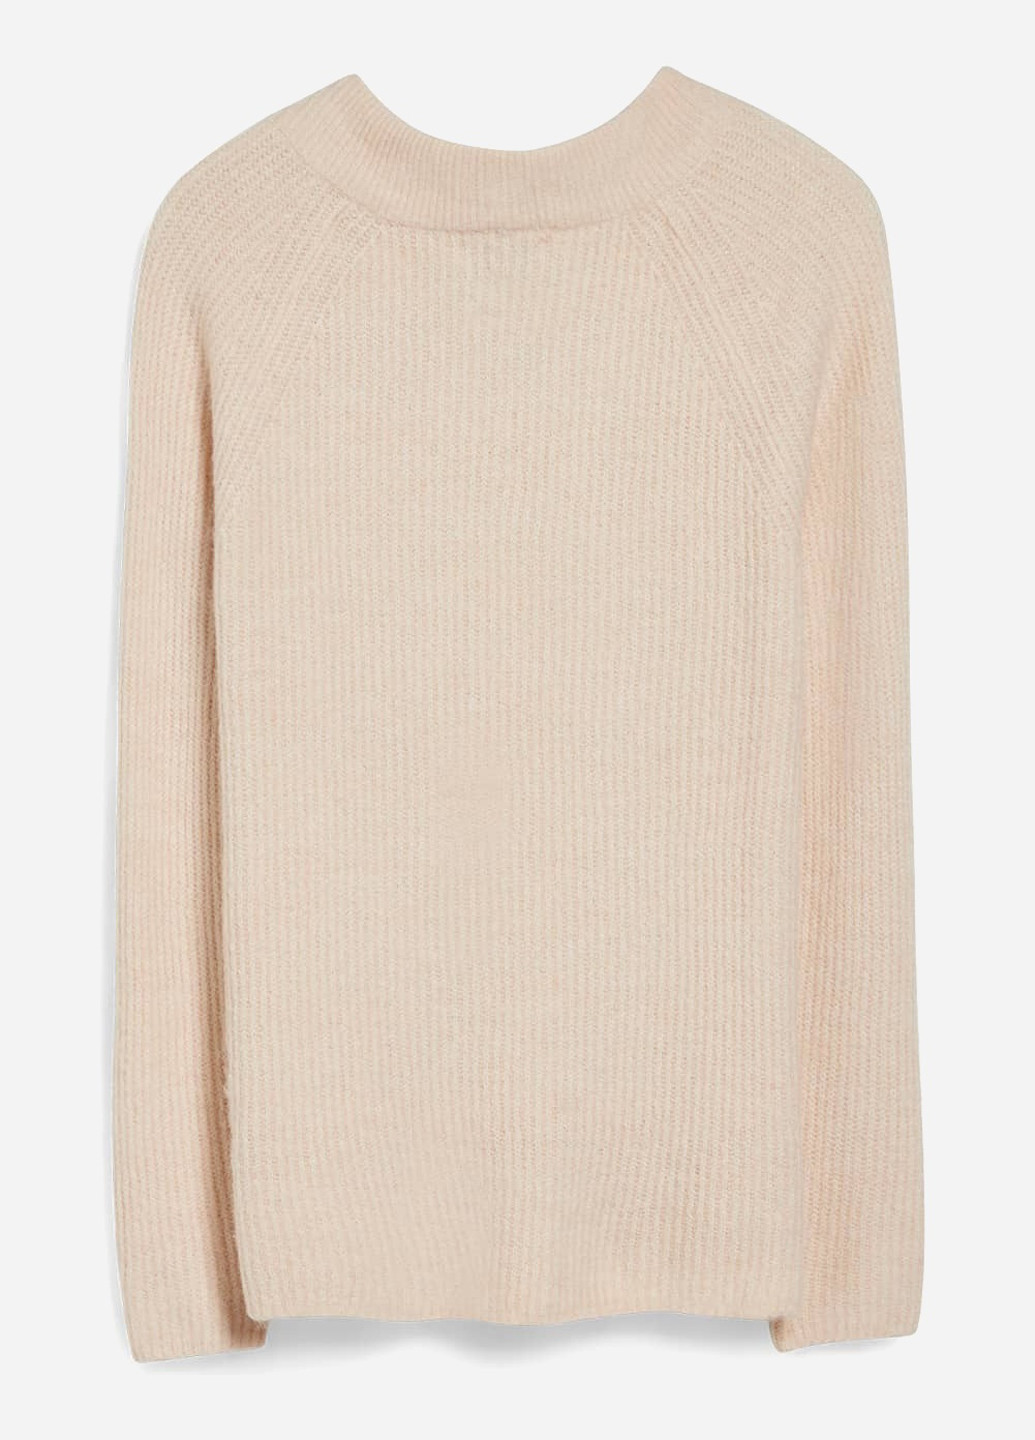 Бежевый демисезонный свитер пуловер C&A